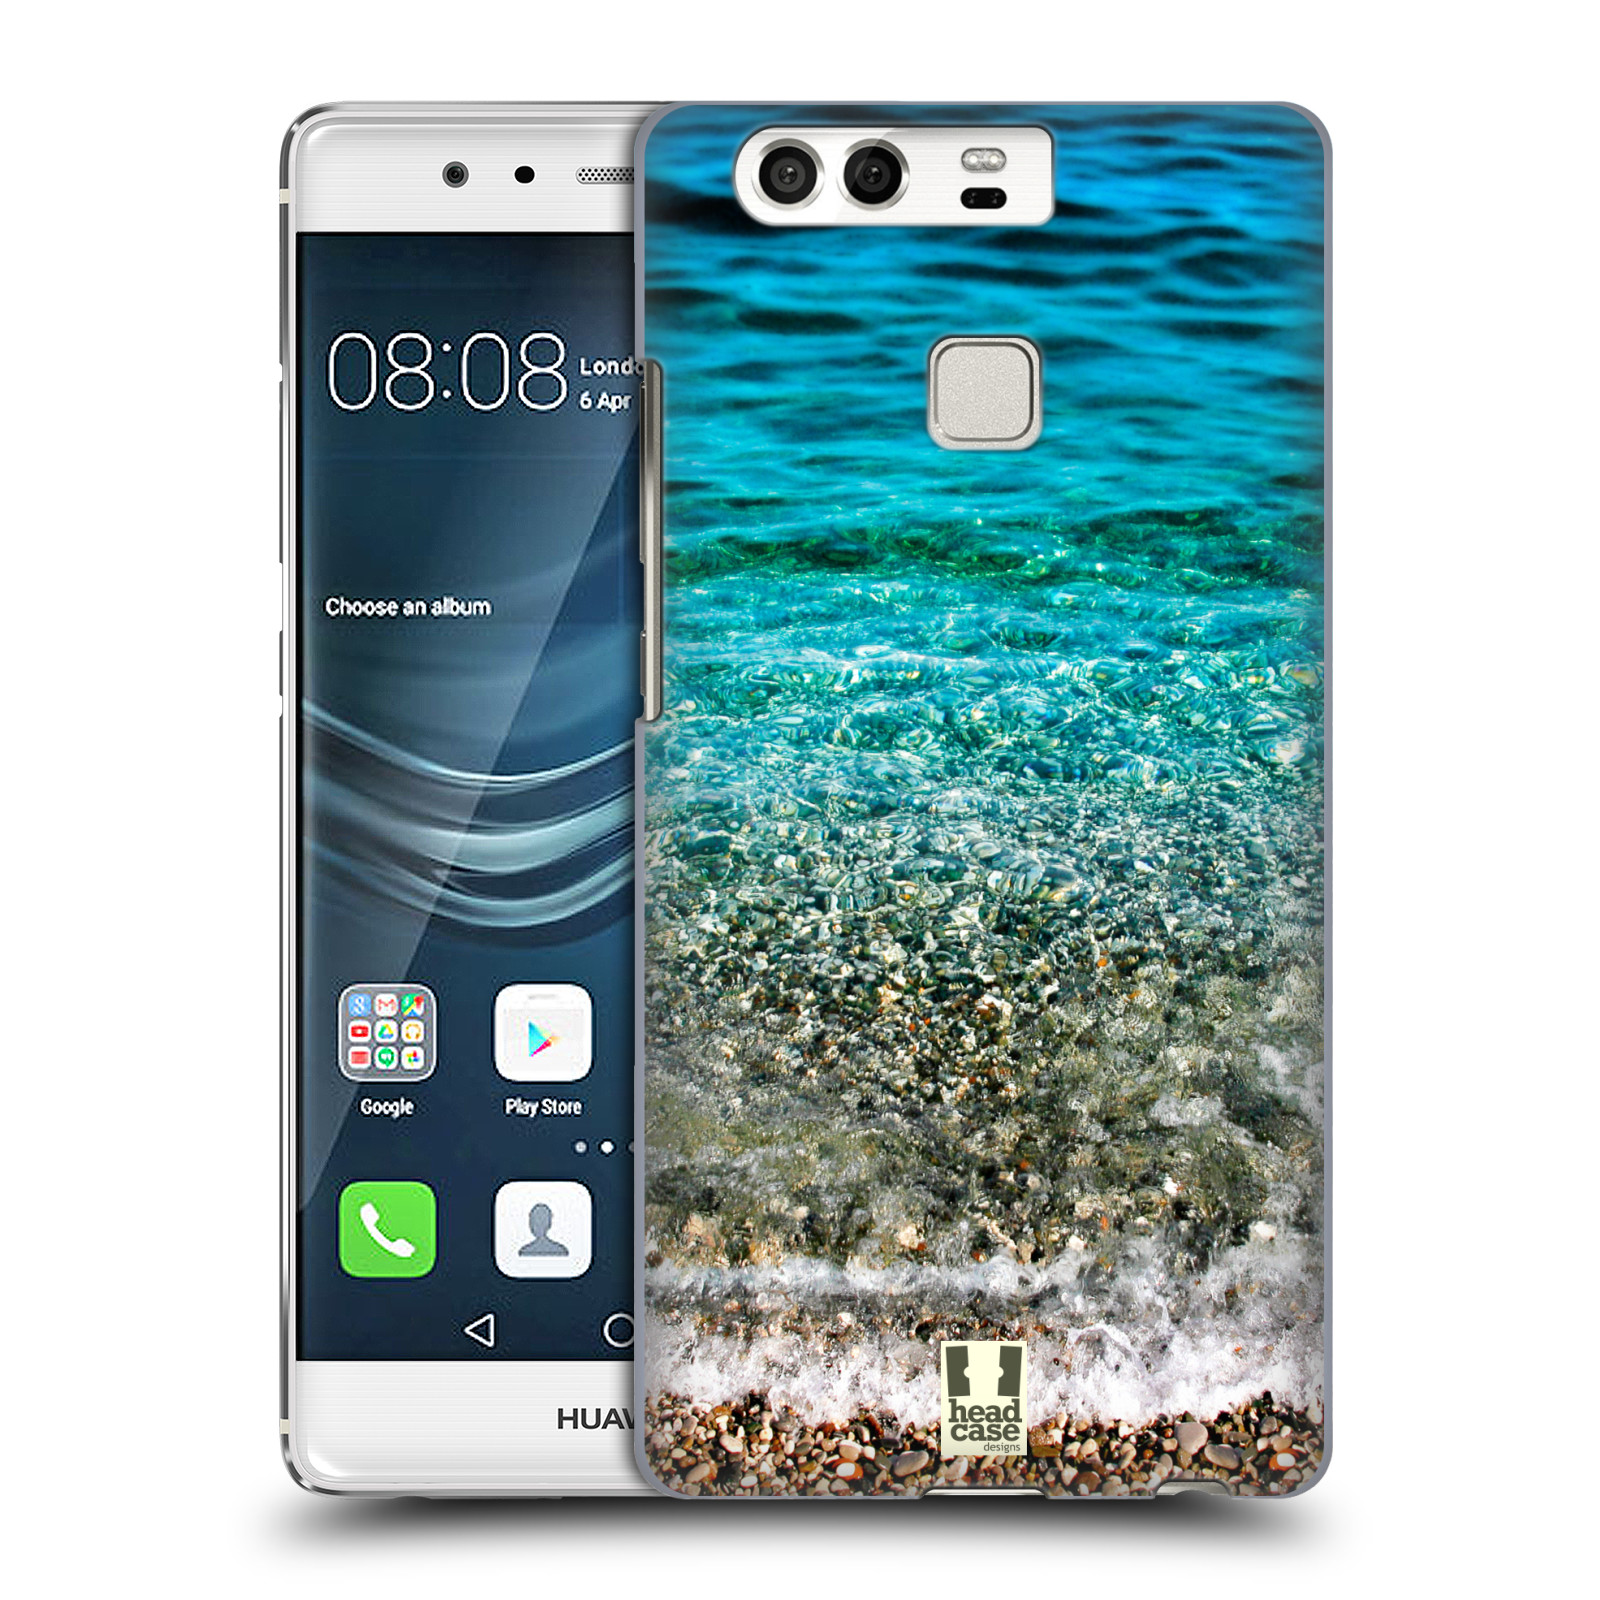 HEAD CASE plastový obal na mobil Huawei P9 / P9 DUAL SIM vzor Pláže a Moře PRŮZRAČNÉ MOŘE S OBLÁZKY